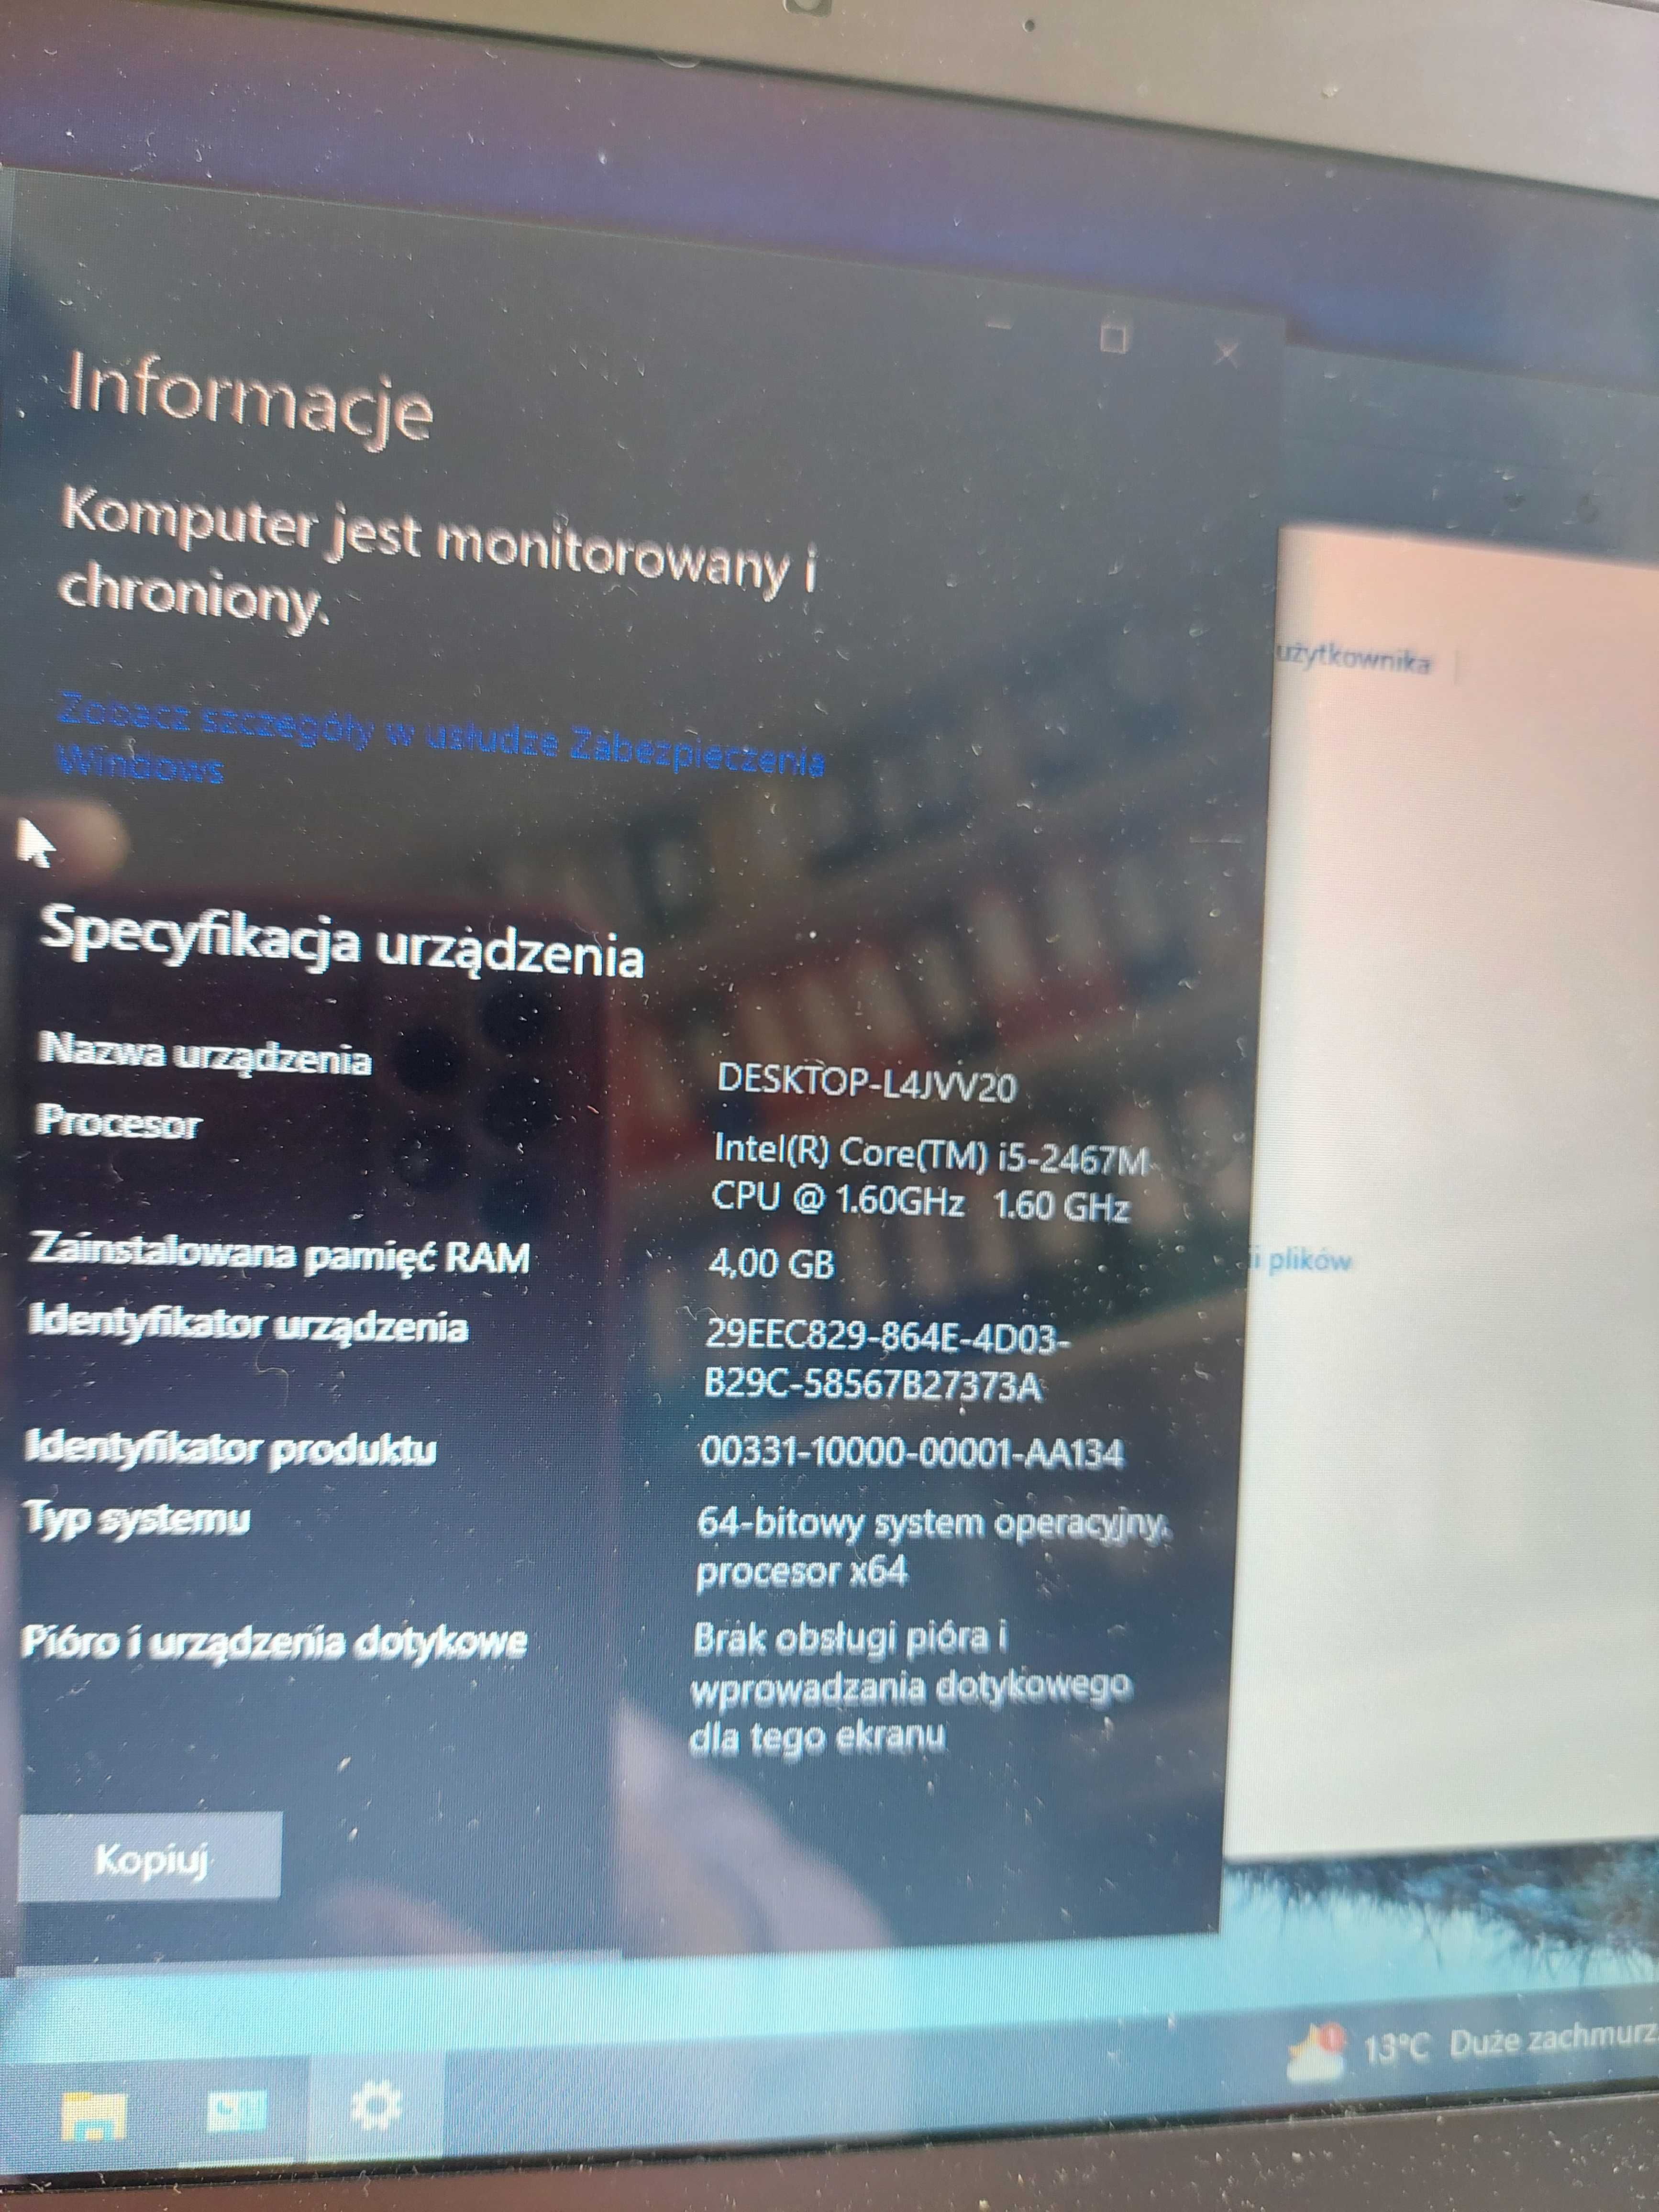 Laptop ultrabook Asus UX21 Windows 10 Pro 4/128 gb SSD Intel i5